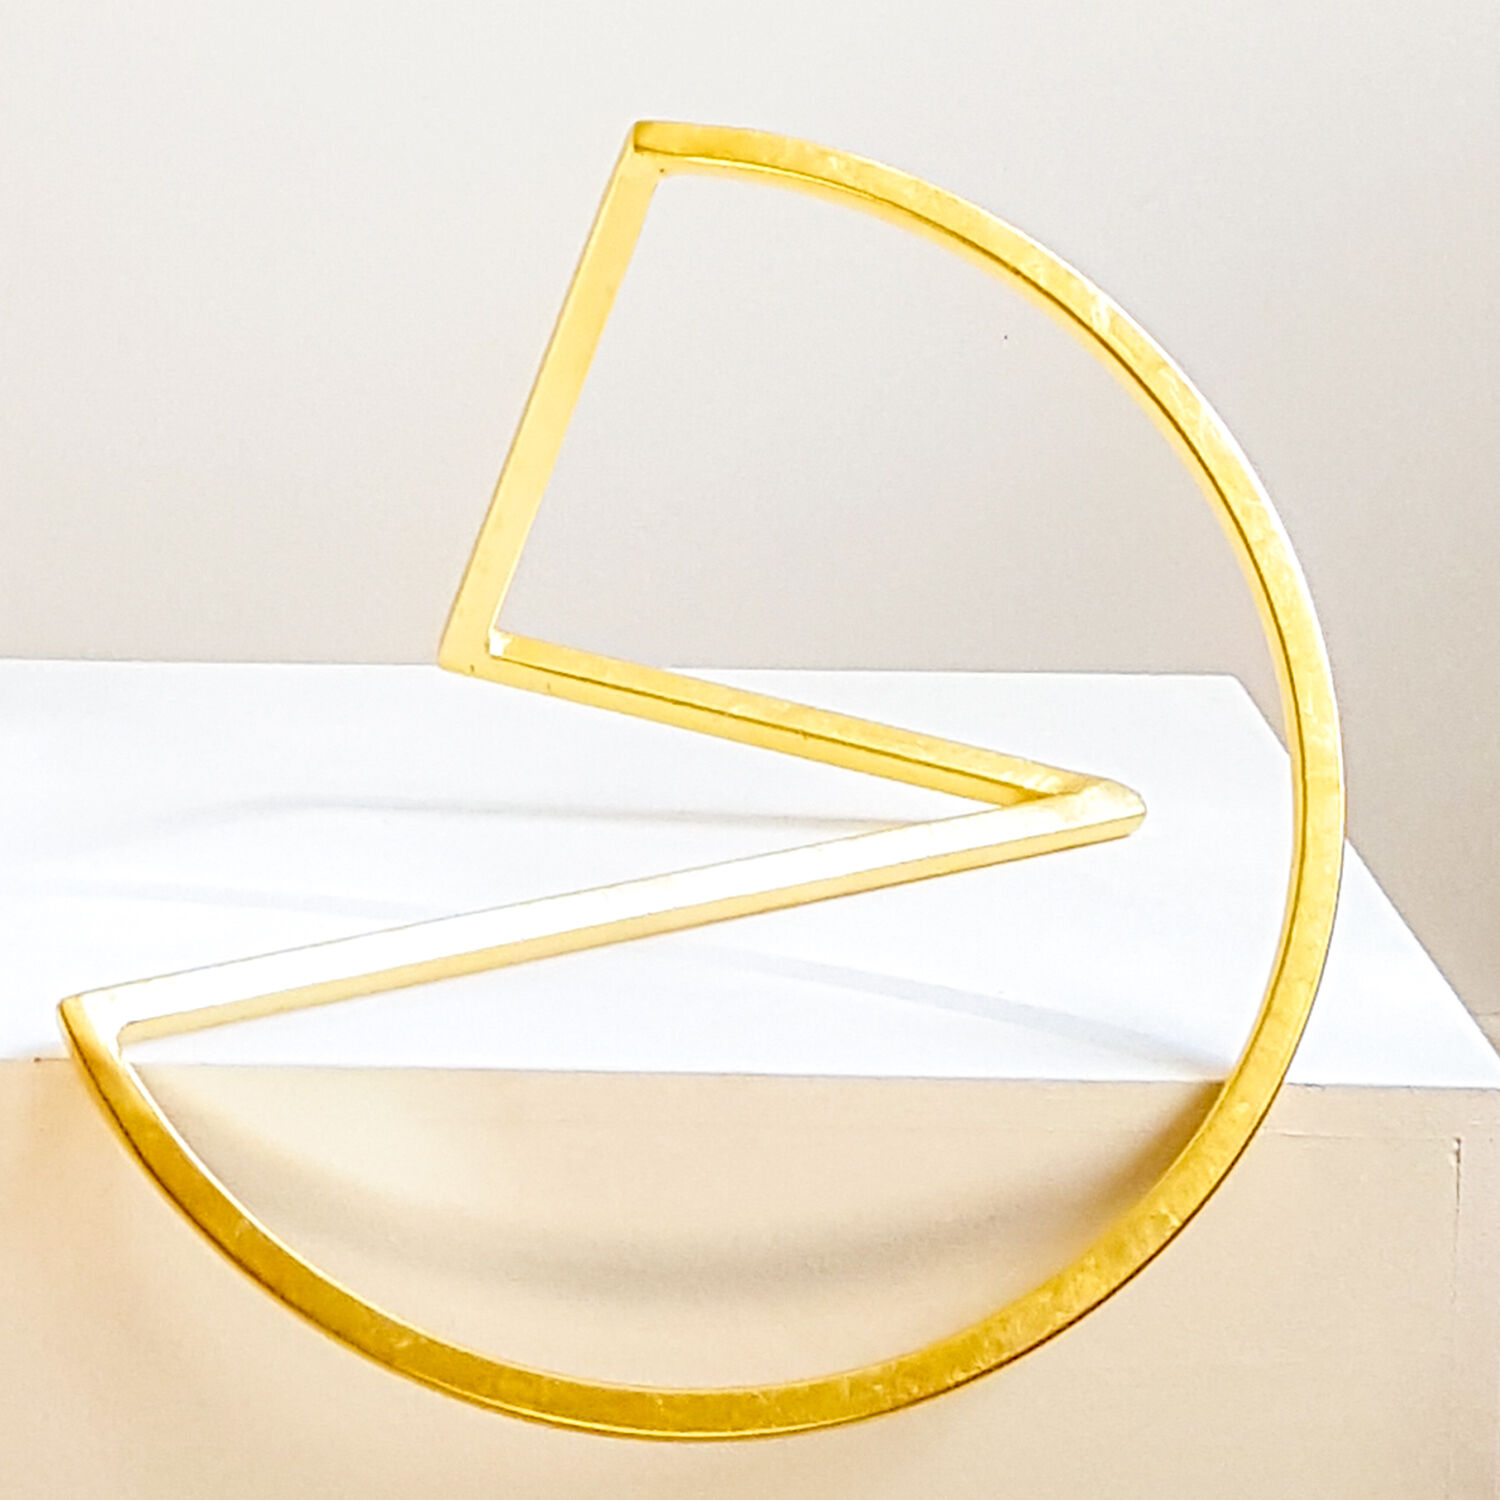 Sculpture "Loop 35 - Gold Edition" (2015) by Sonja Edle von Hoeßle